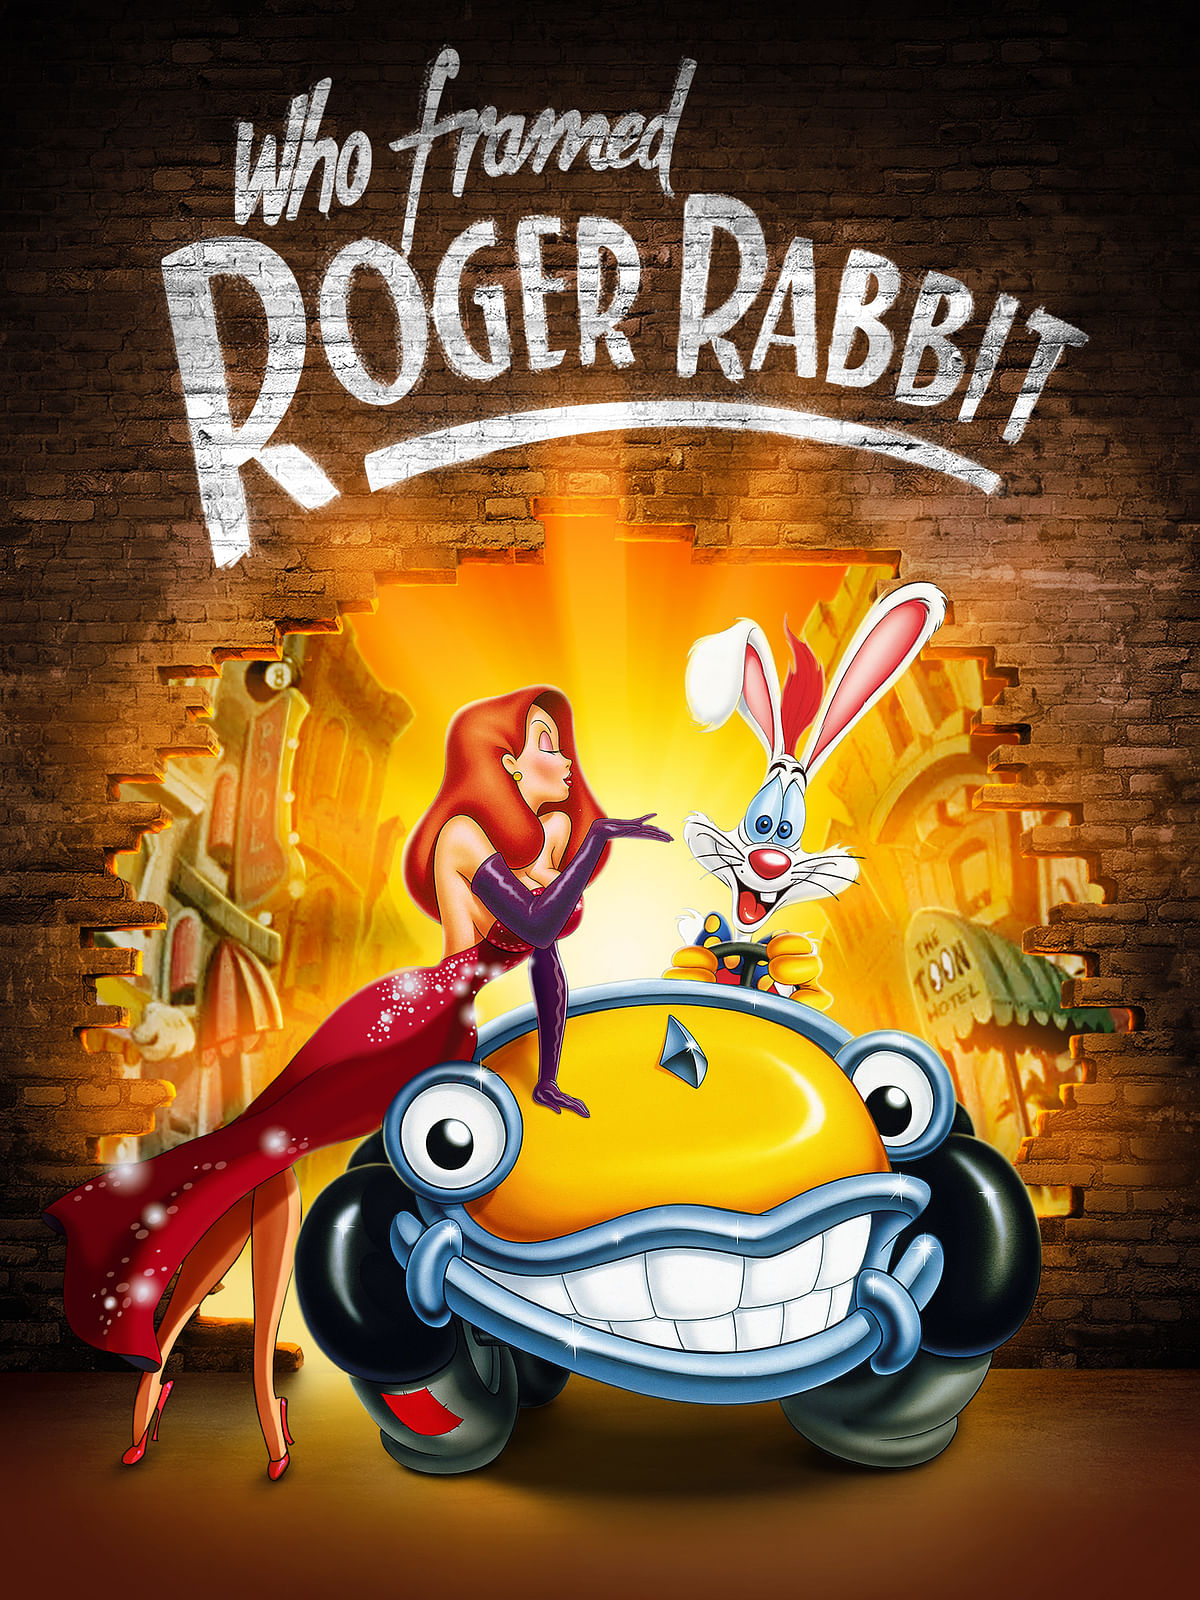 Roger Rabbit costume